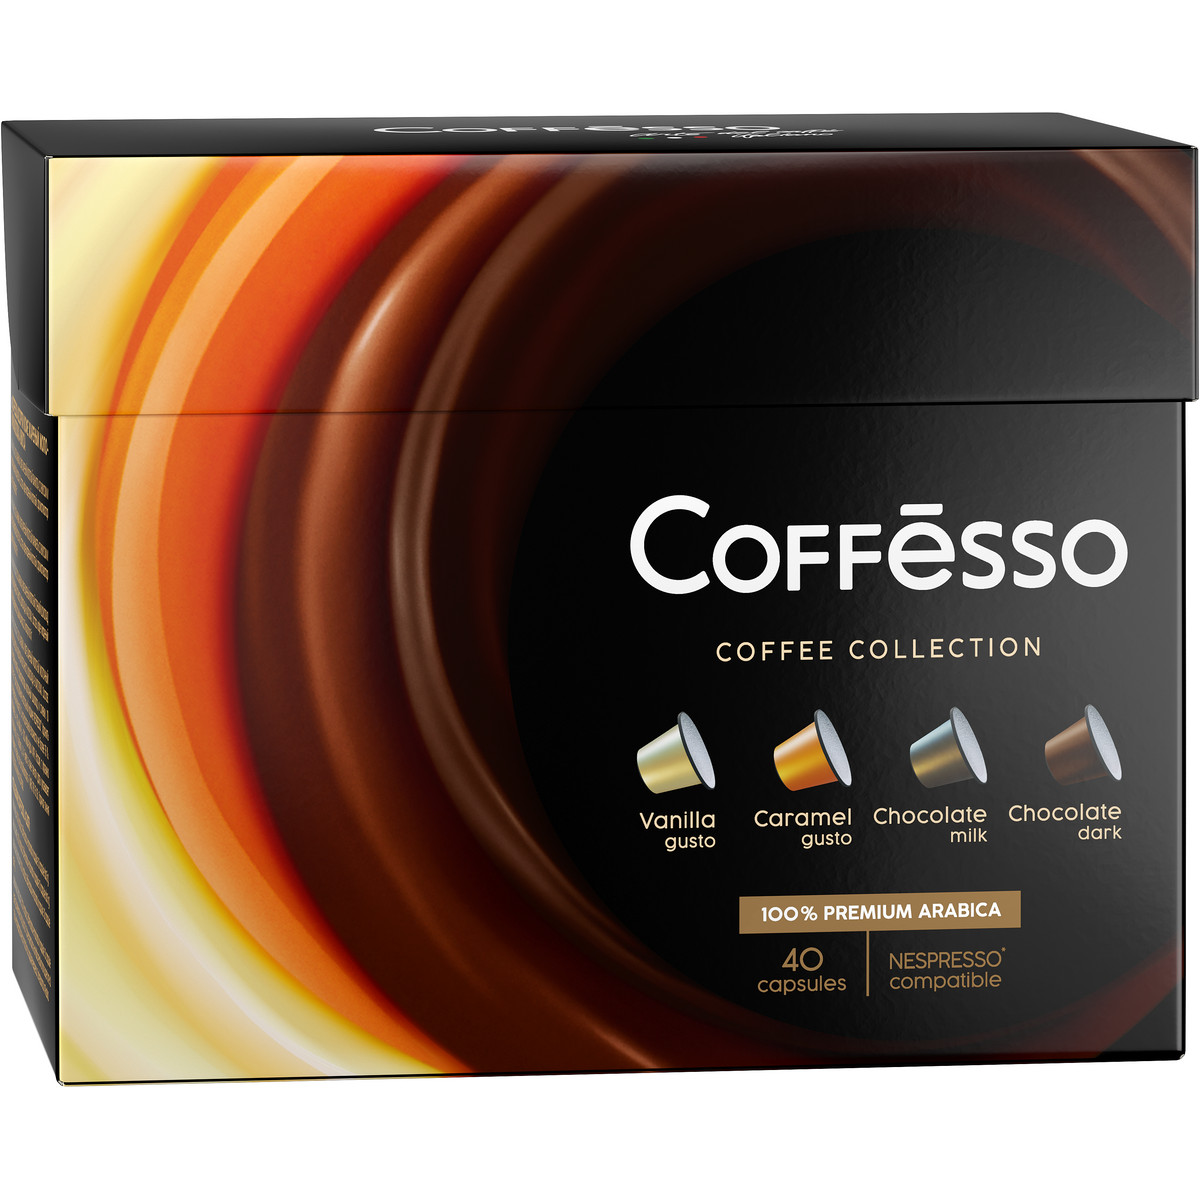 Кофе Coffesso Ассорти Арома 40 капсул, 4 вкуса